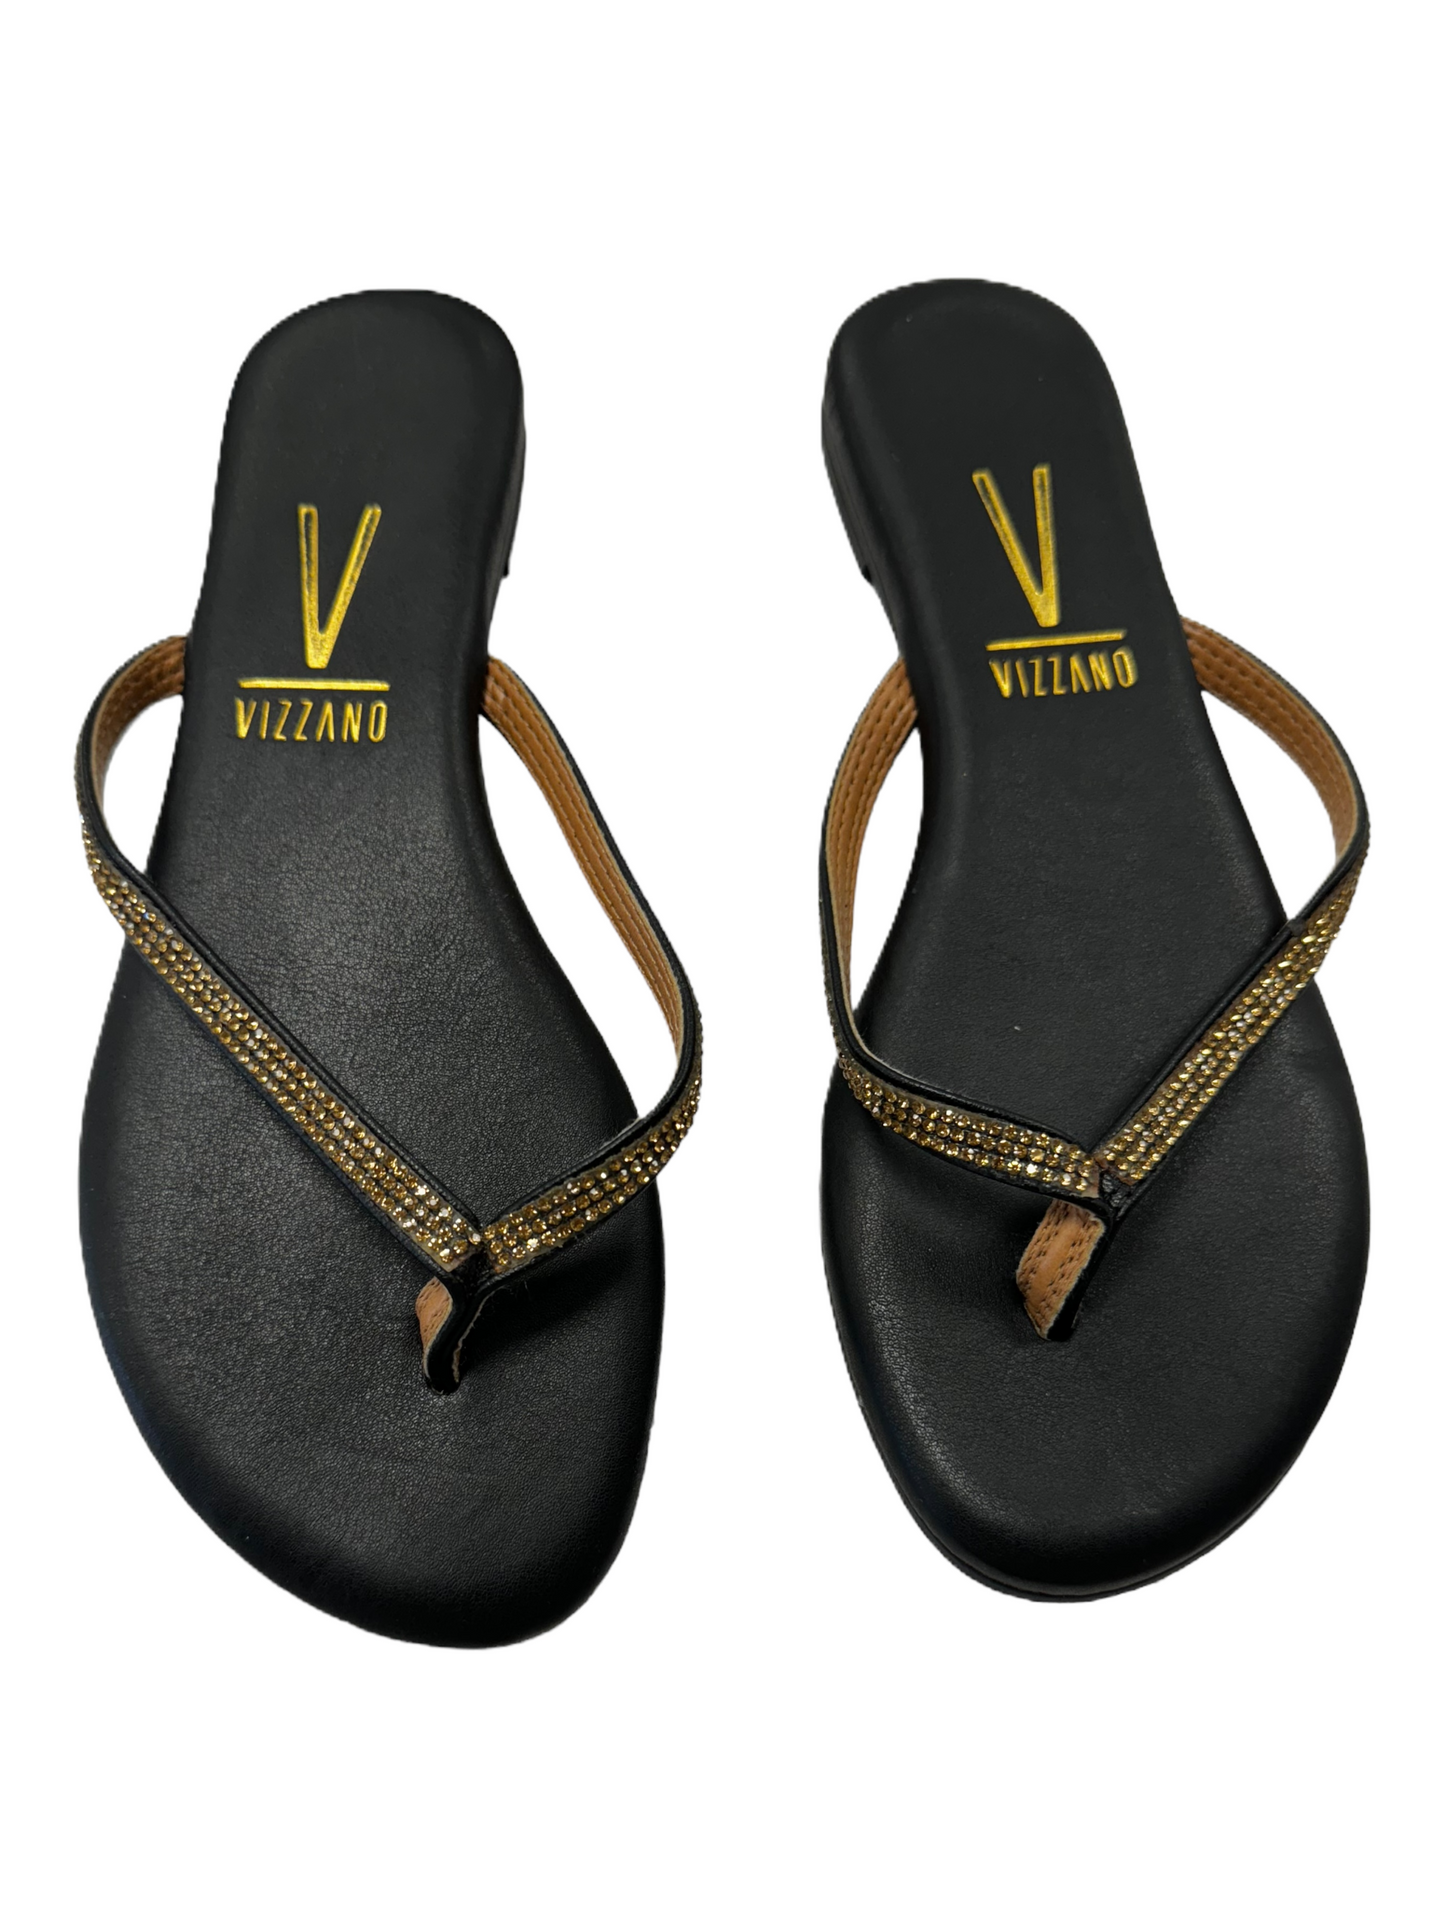 Sandals Flip Flops By VIZZUNO  Size: 7